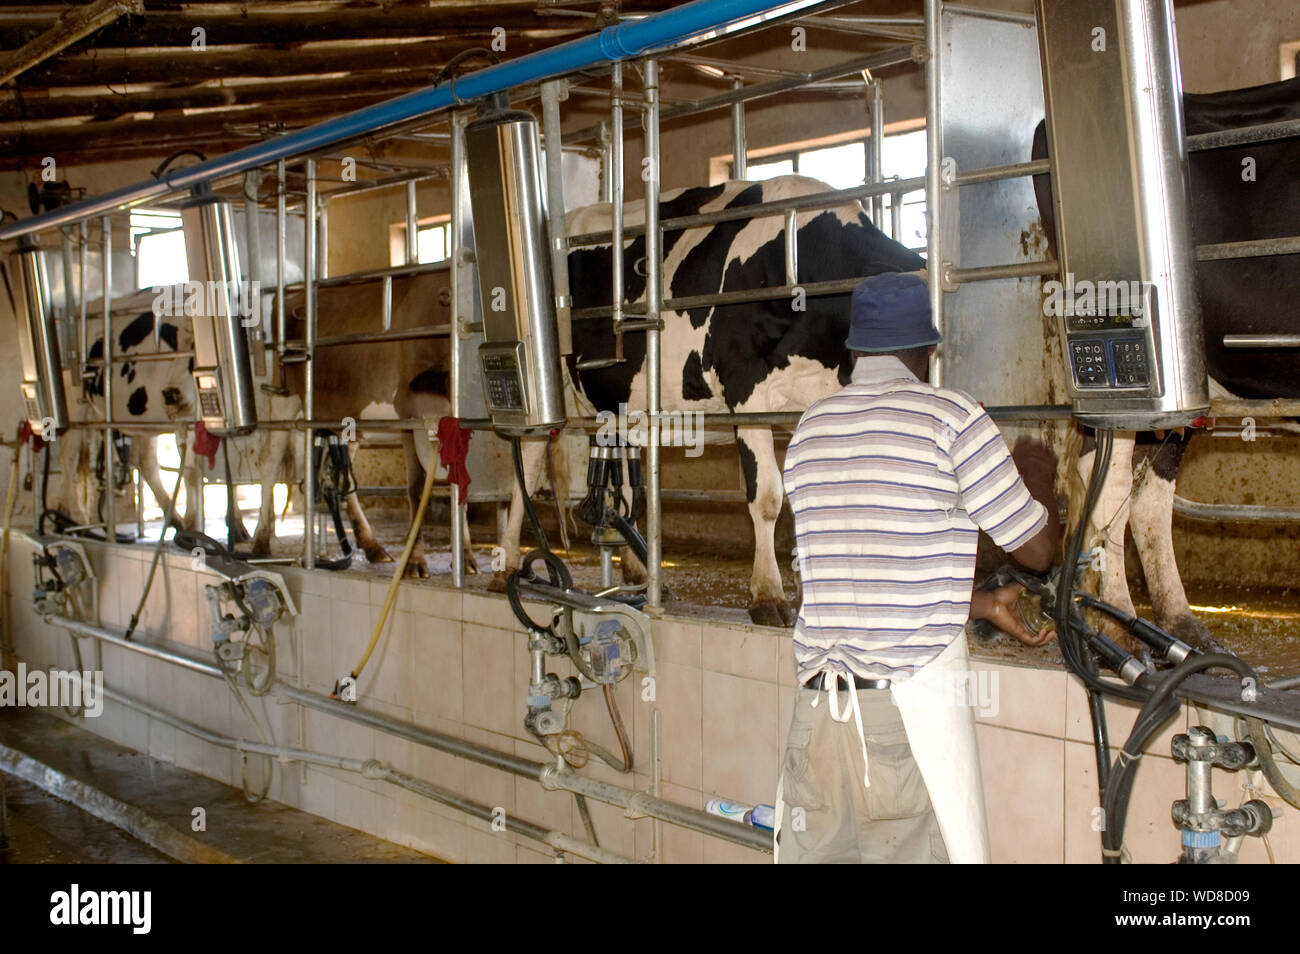 Milking Parlor at work Stock Photo